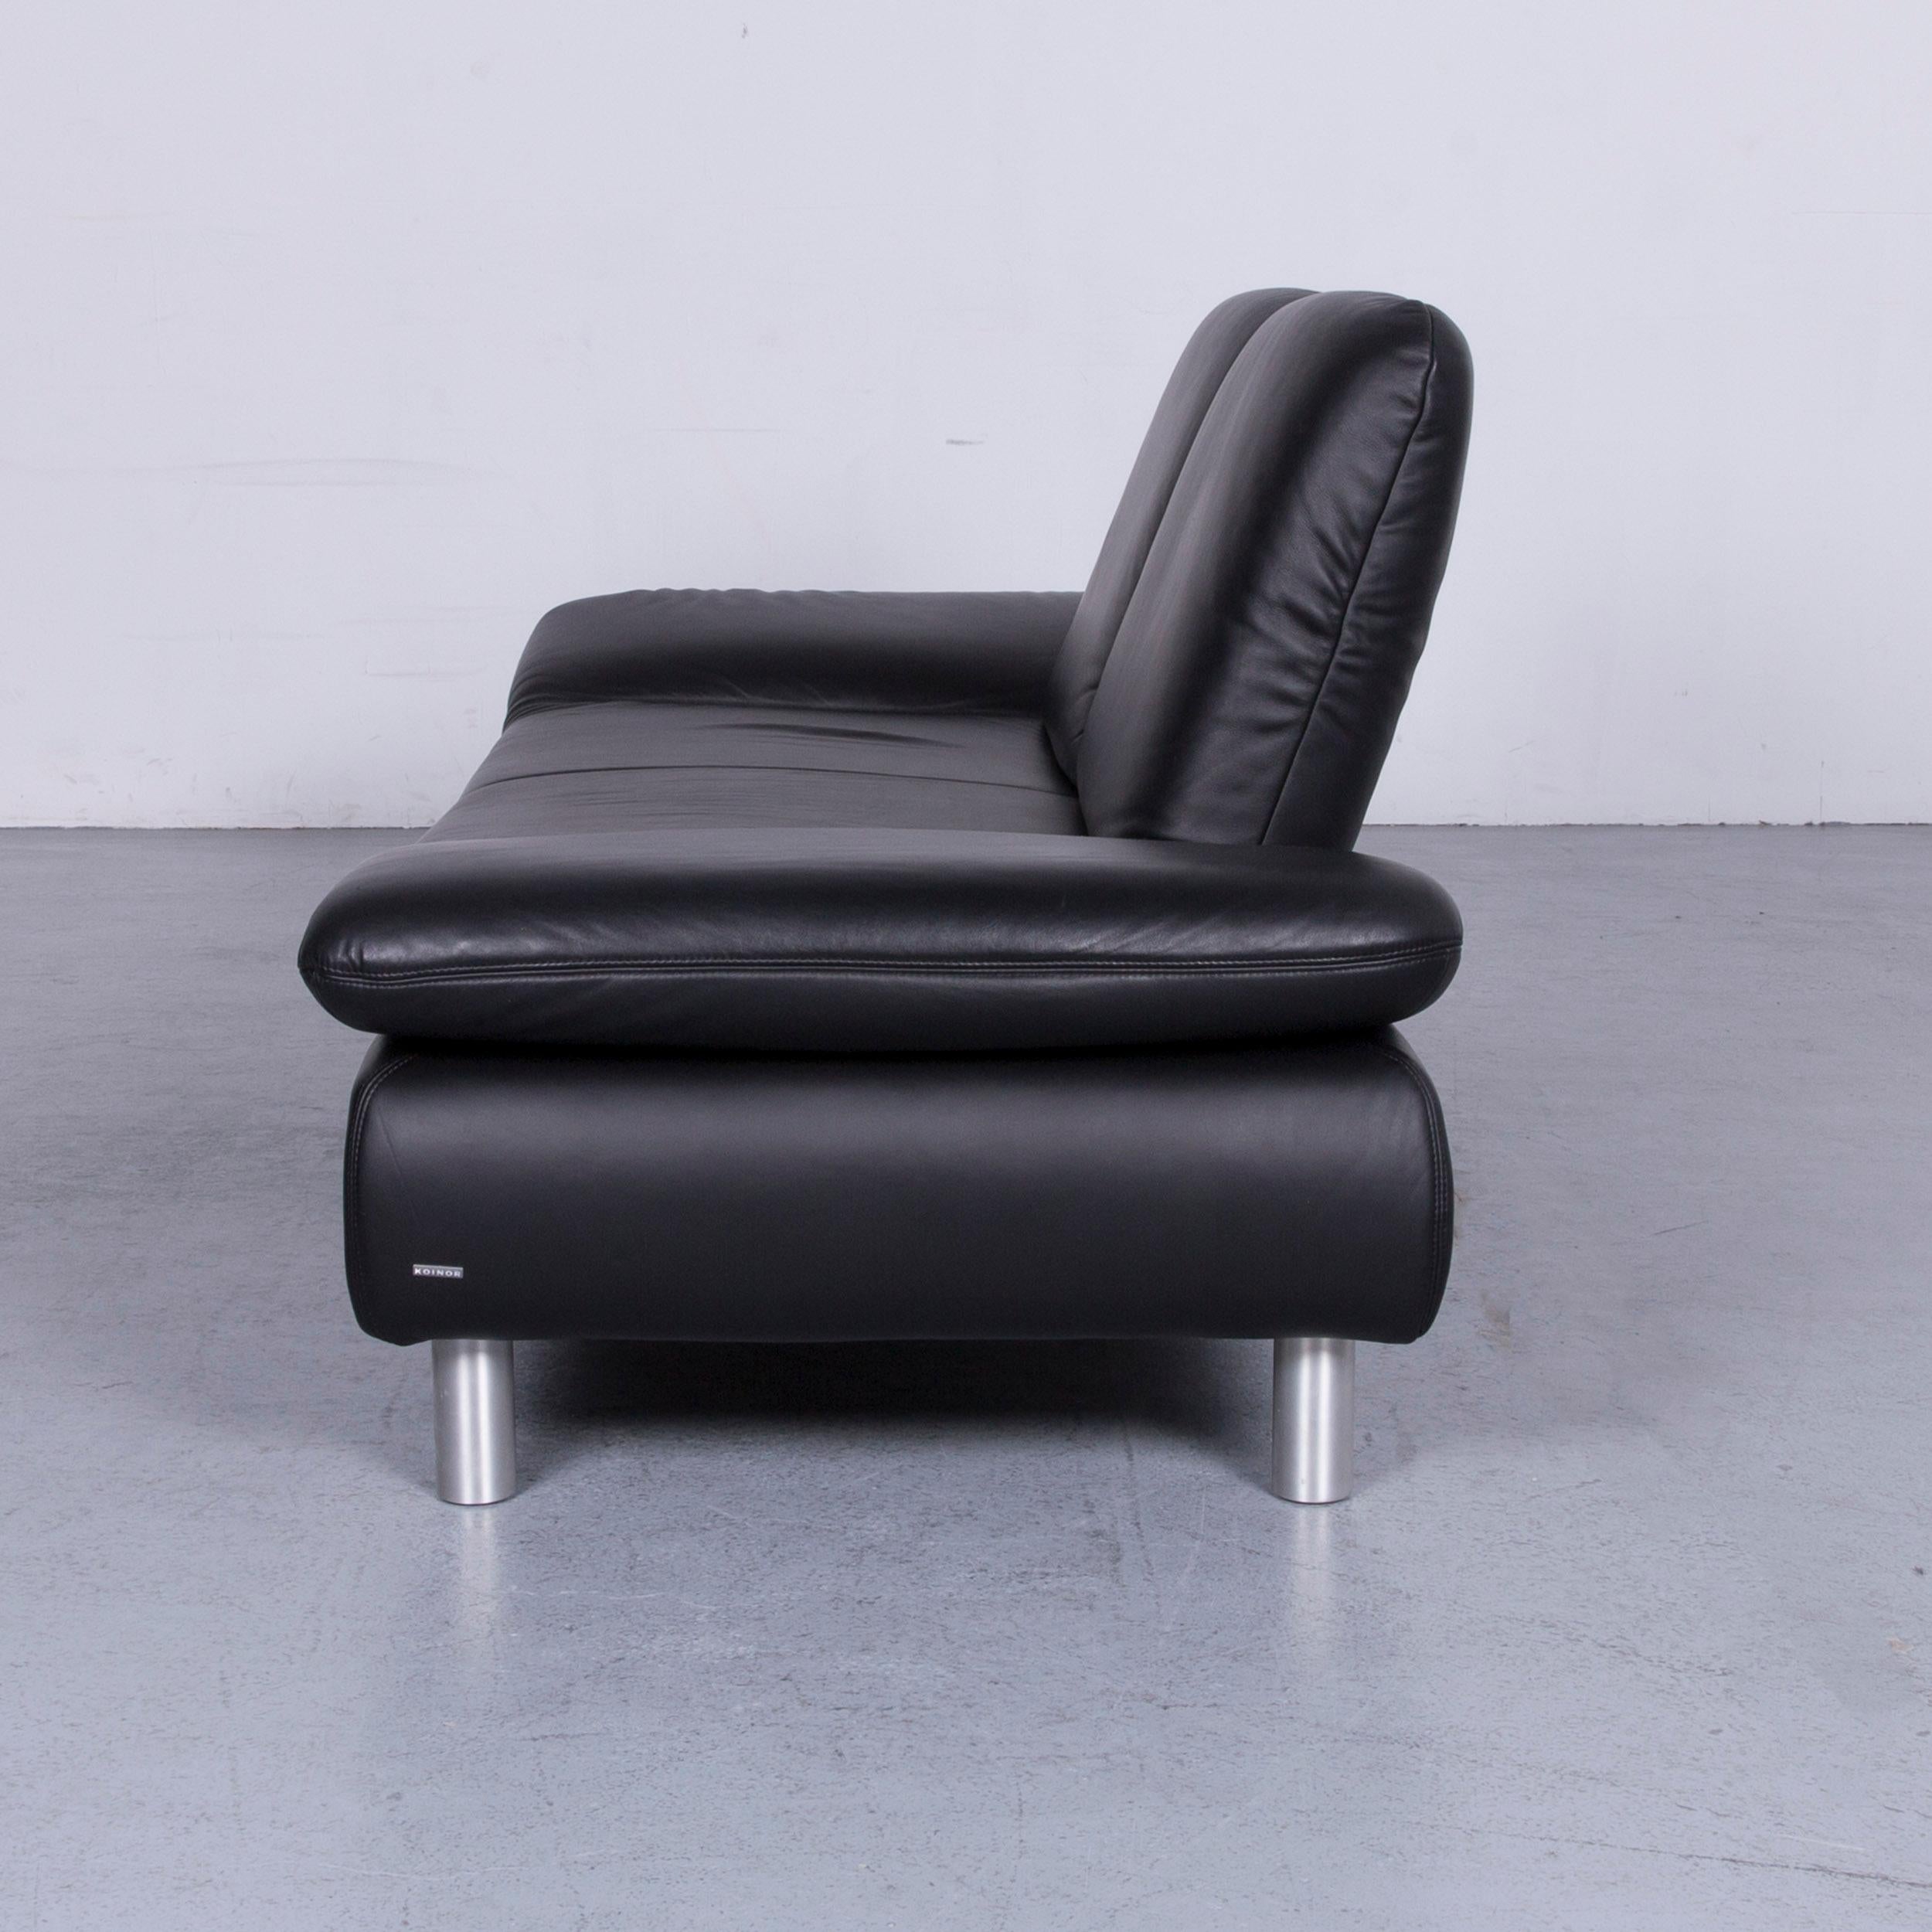 Koinor Rivoli Designer Leather Three-Seat Sofa in Black with Functions 5